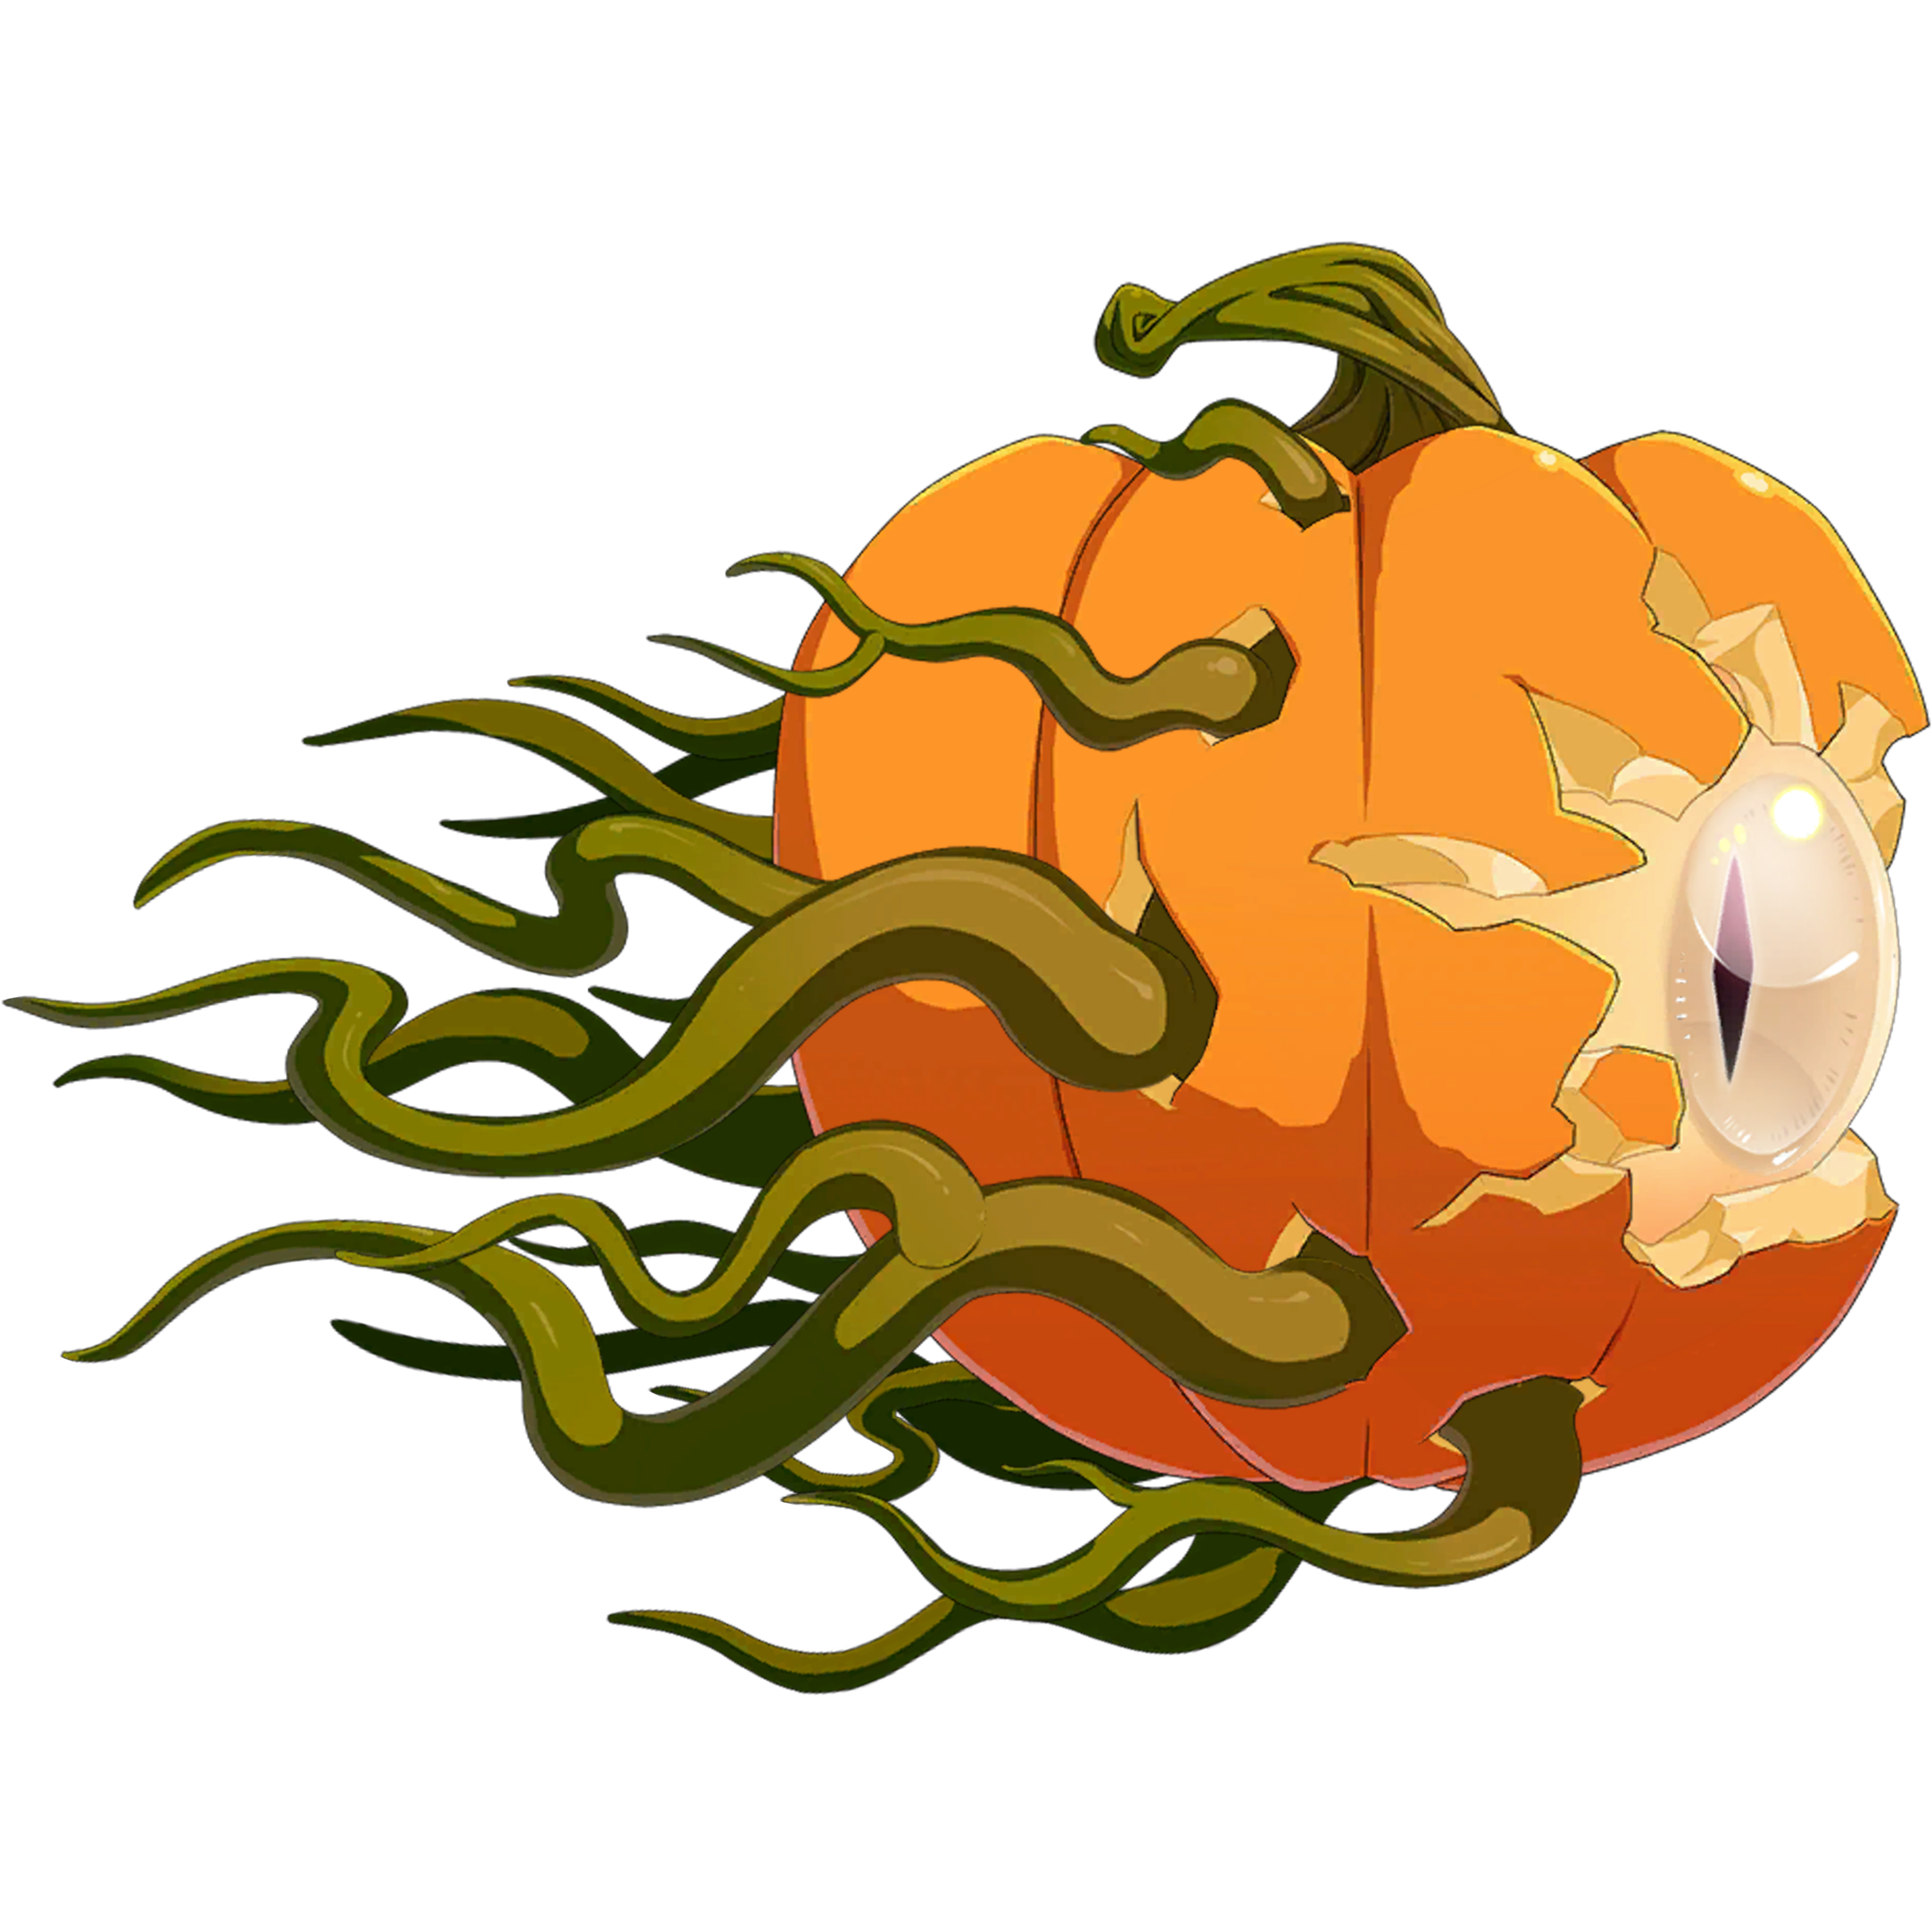 Magic Pumpkin, Eyes the horror game Wiki